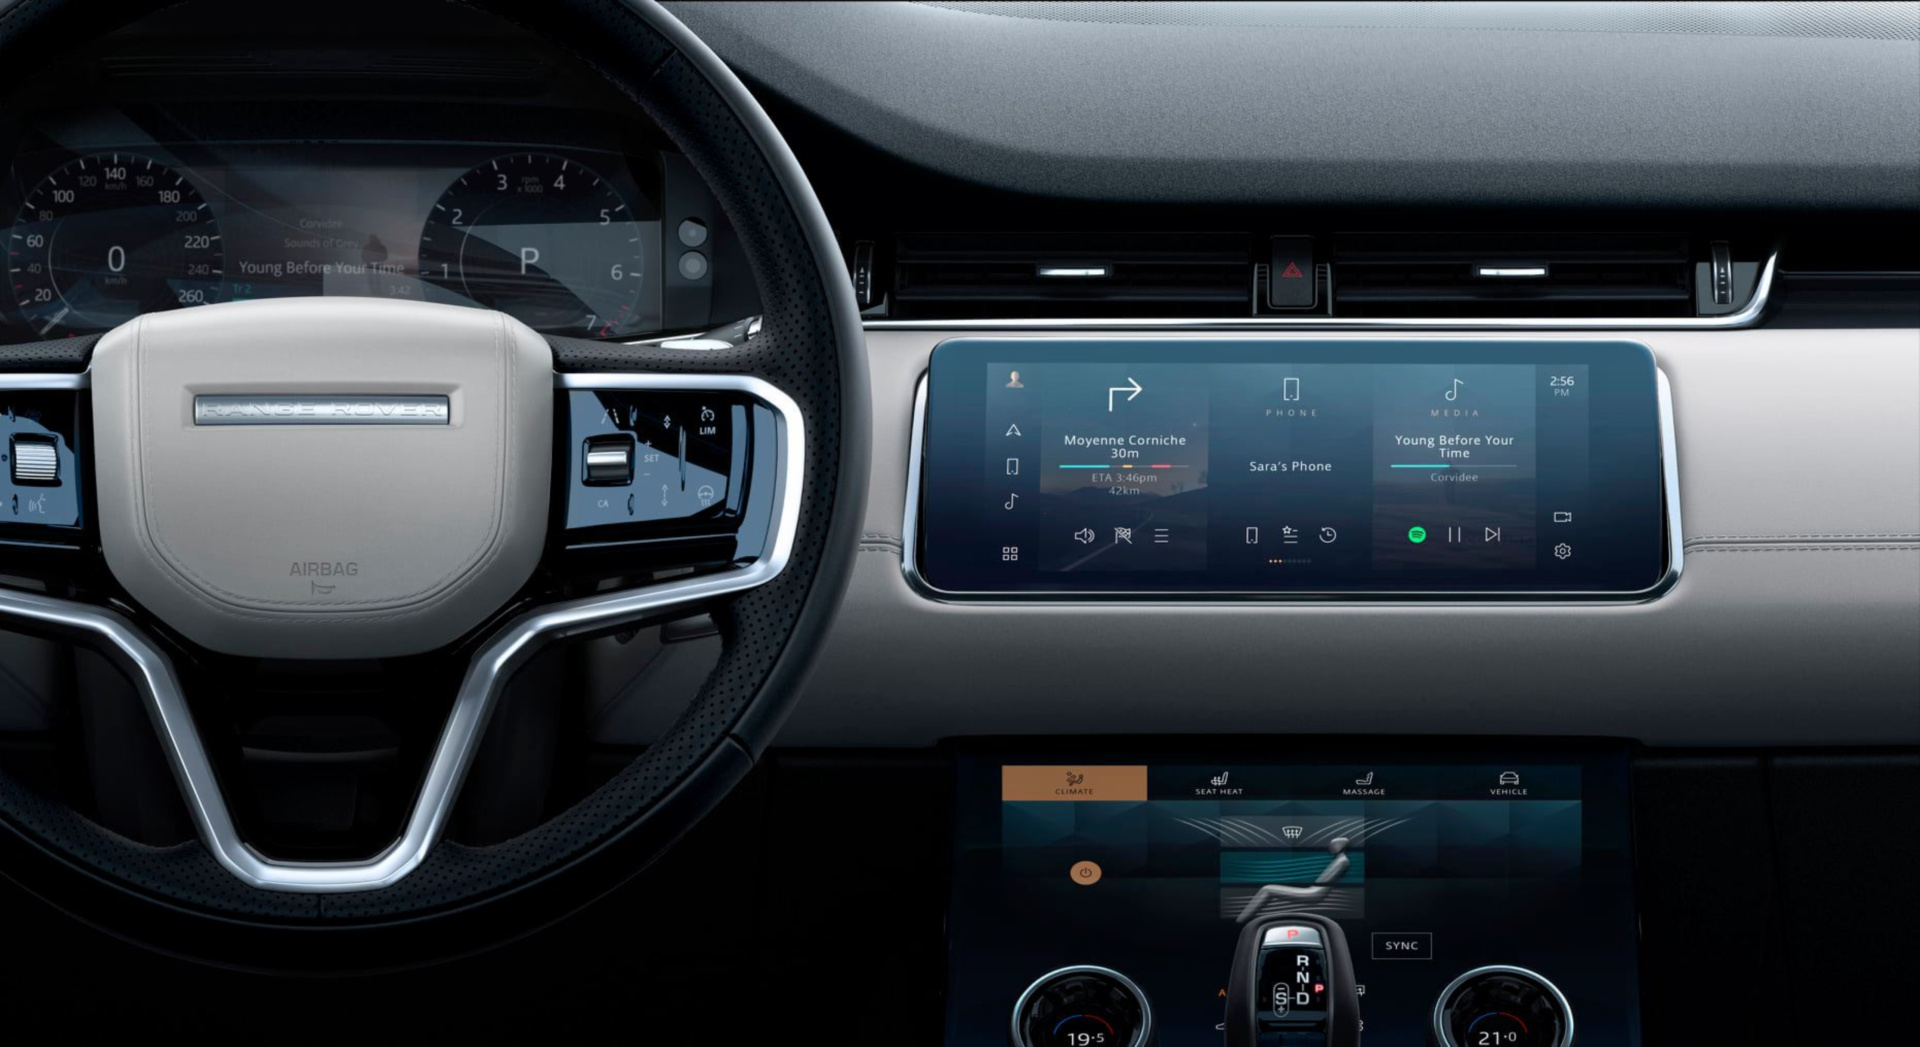 SMALL_圖 3 - 全新 2021 年式 Range Rover Evoque 與 Discovery Sport 全車系同步升級 Jaguar Land Rover 最新世代 Pivi Pro 智慧科技介面。